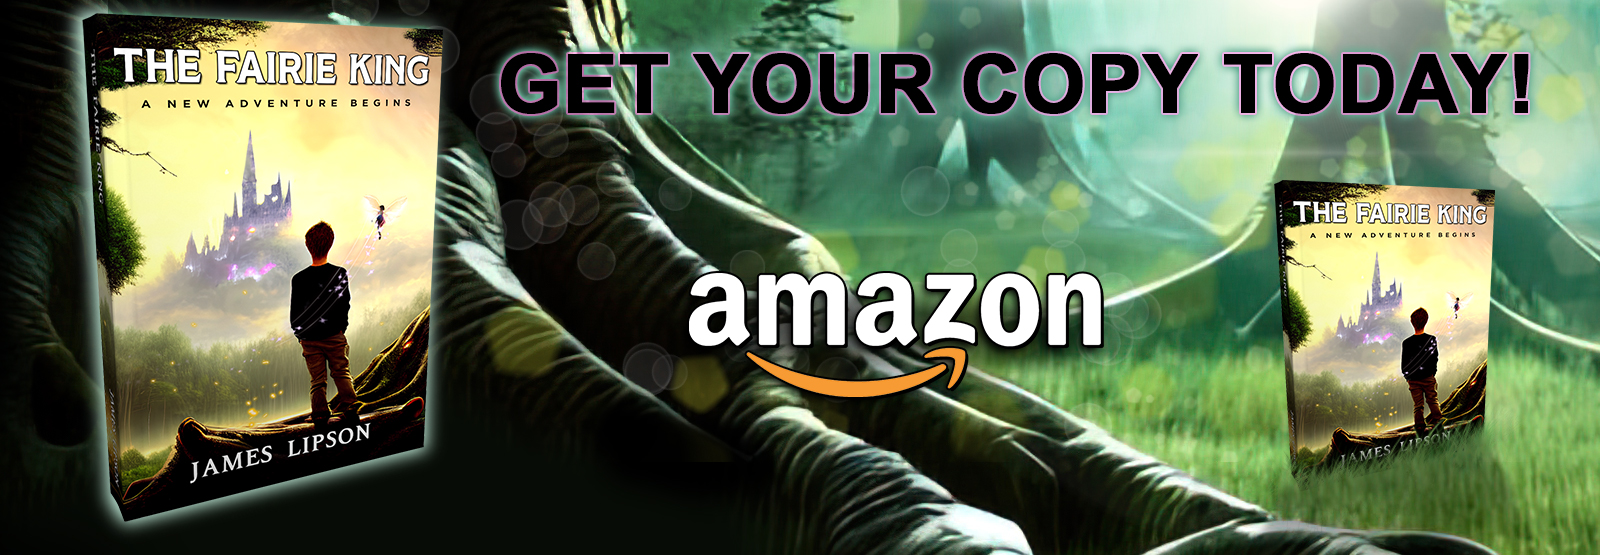 The Fairie King - Available on Amazon